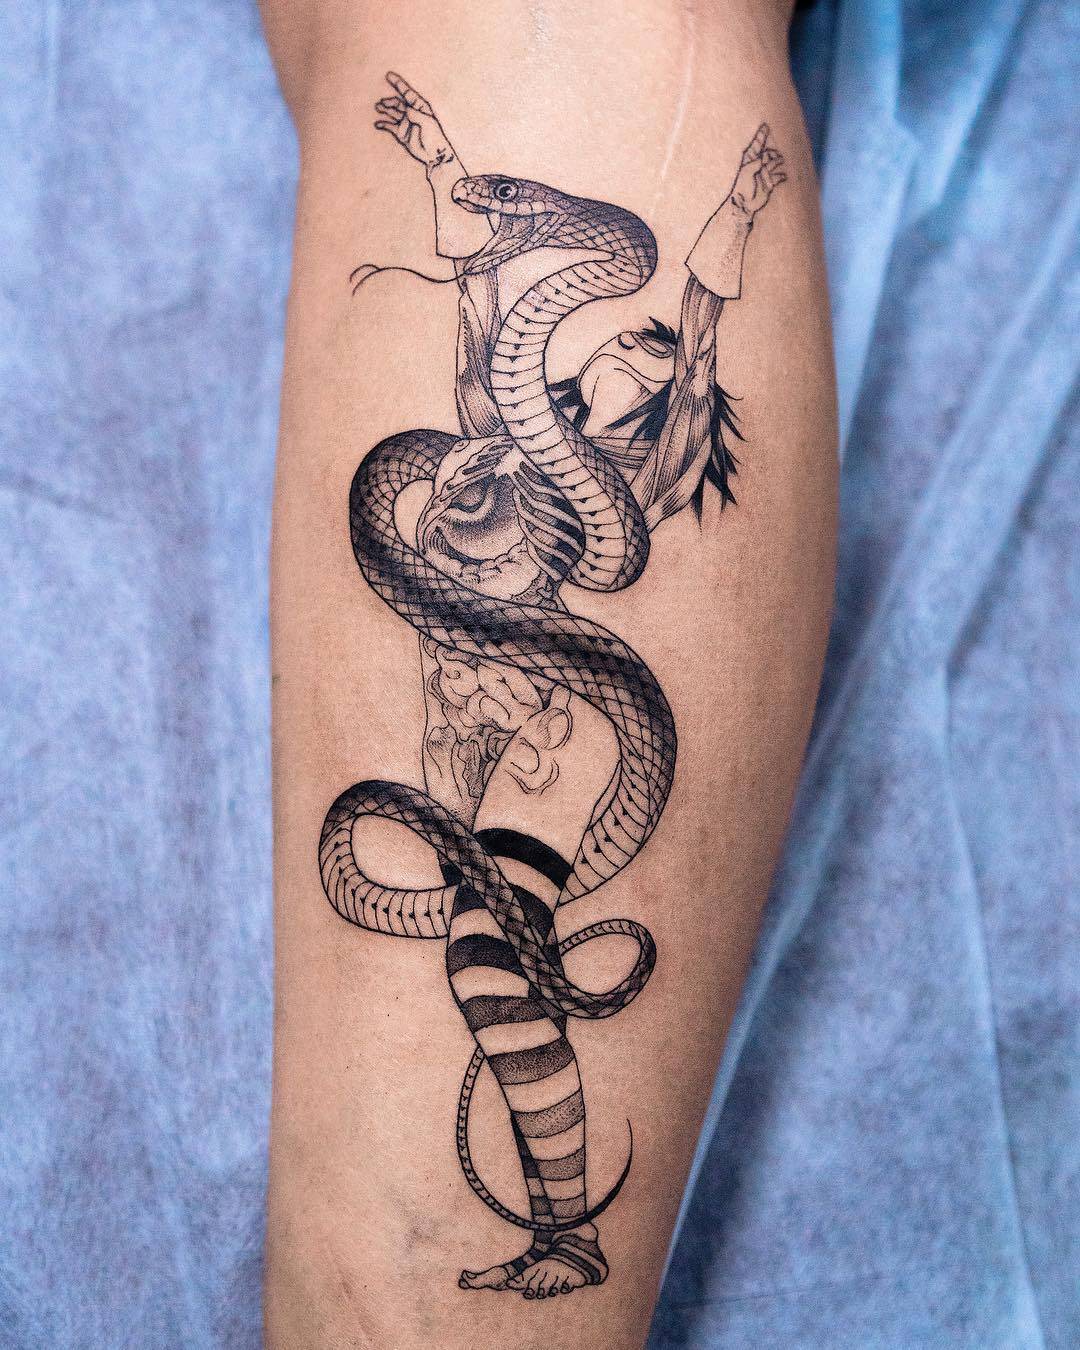 Tattoo artist Oozy, authors sketch surrealistic tattoo | Seoul, Korea